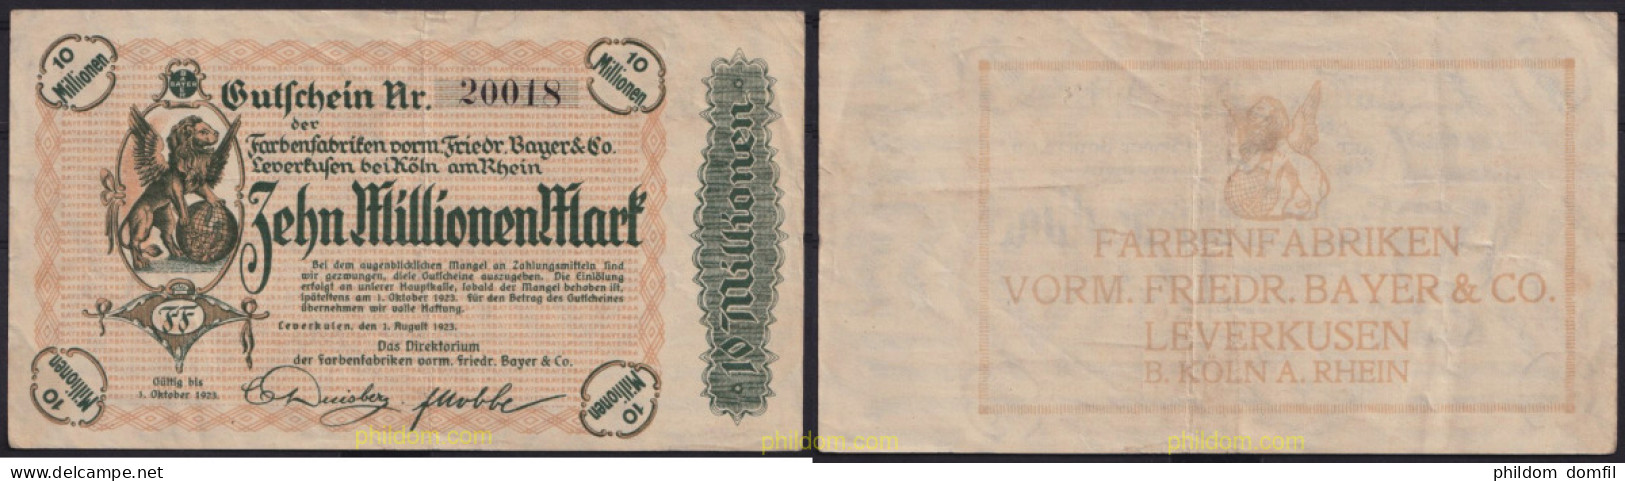 3671 ALEMANIA 1923 GERMANY 10000000 MARK 1923 LEVERKUSEN FARBENFABRIKEN VORM FRIEDR. BAYER & CO - Imperial Debt Administration